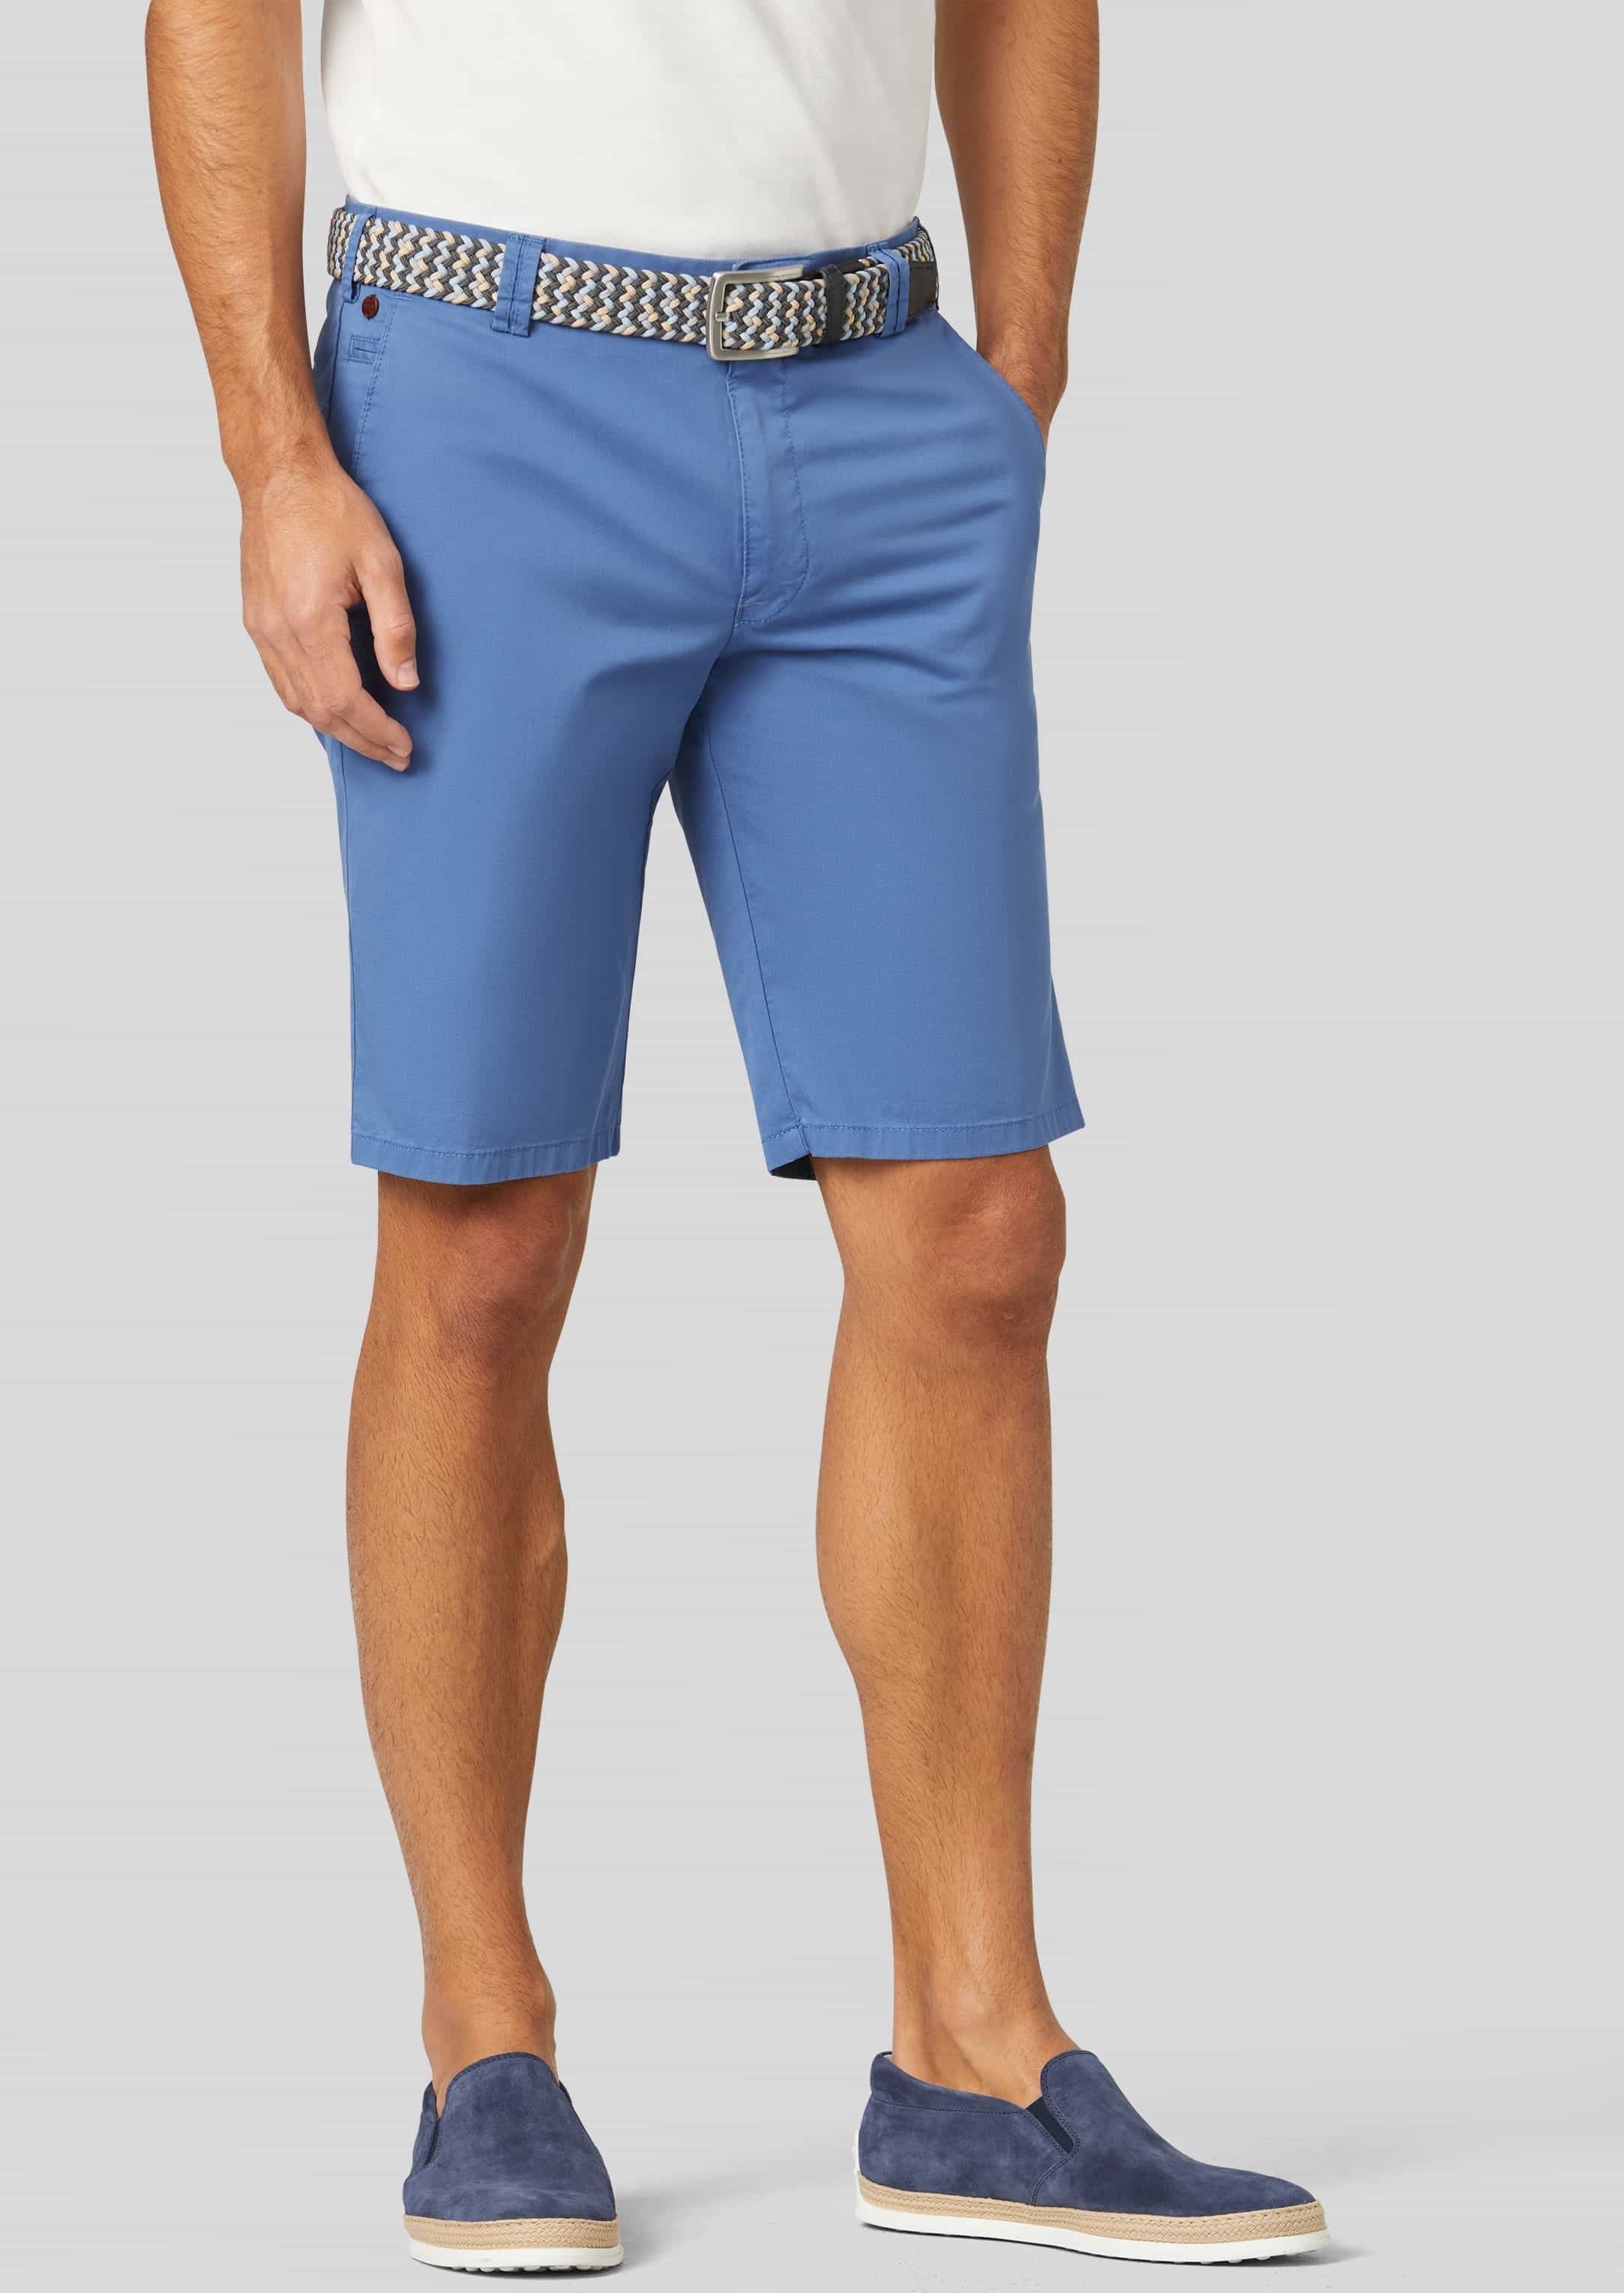 MEYER B-Palma Shorts - Men's Cotton Twill - Blue